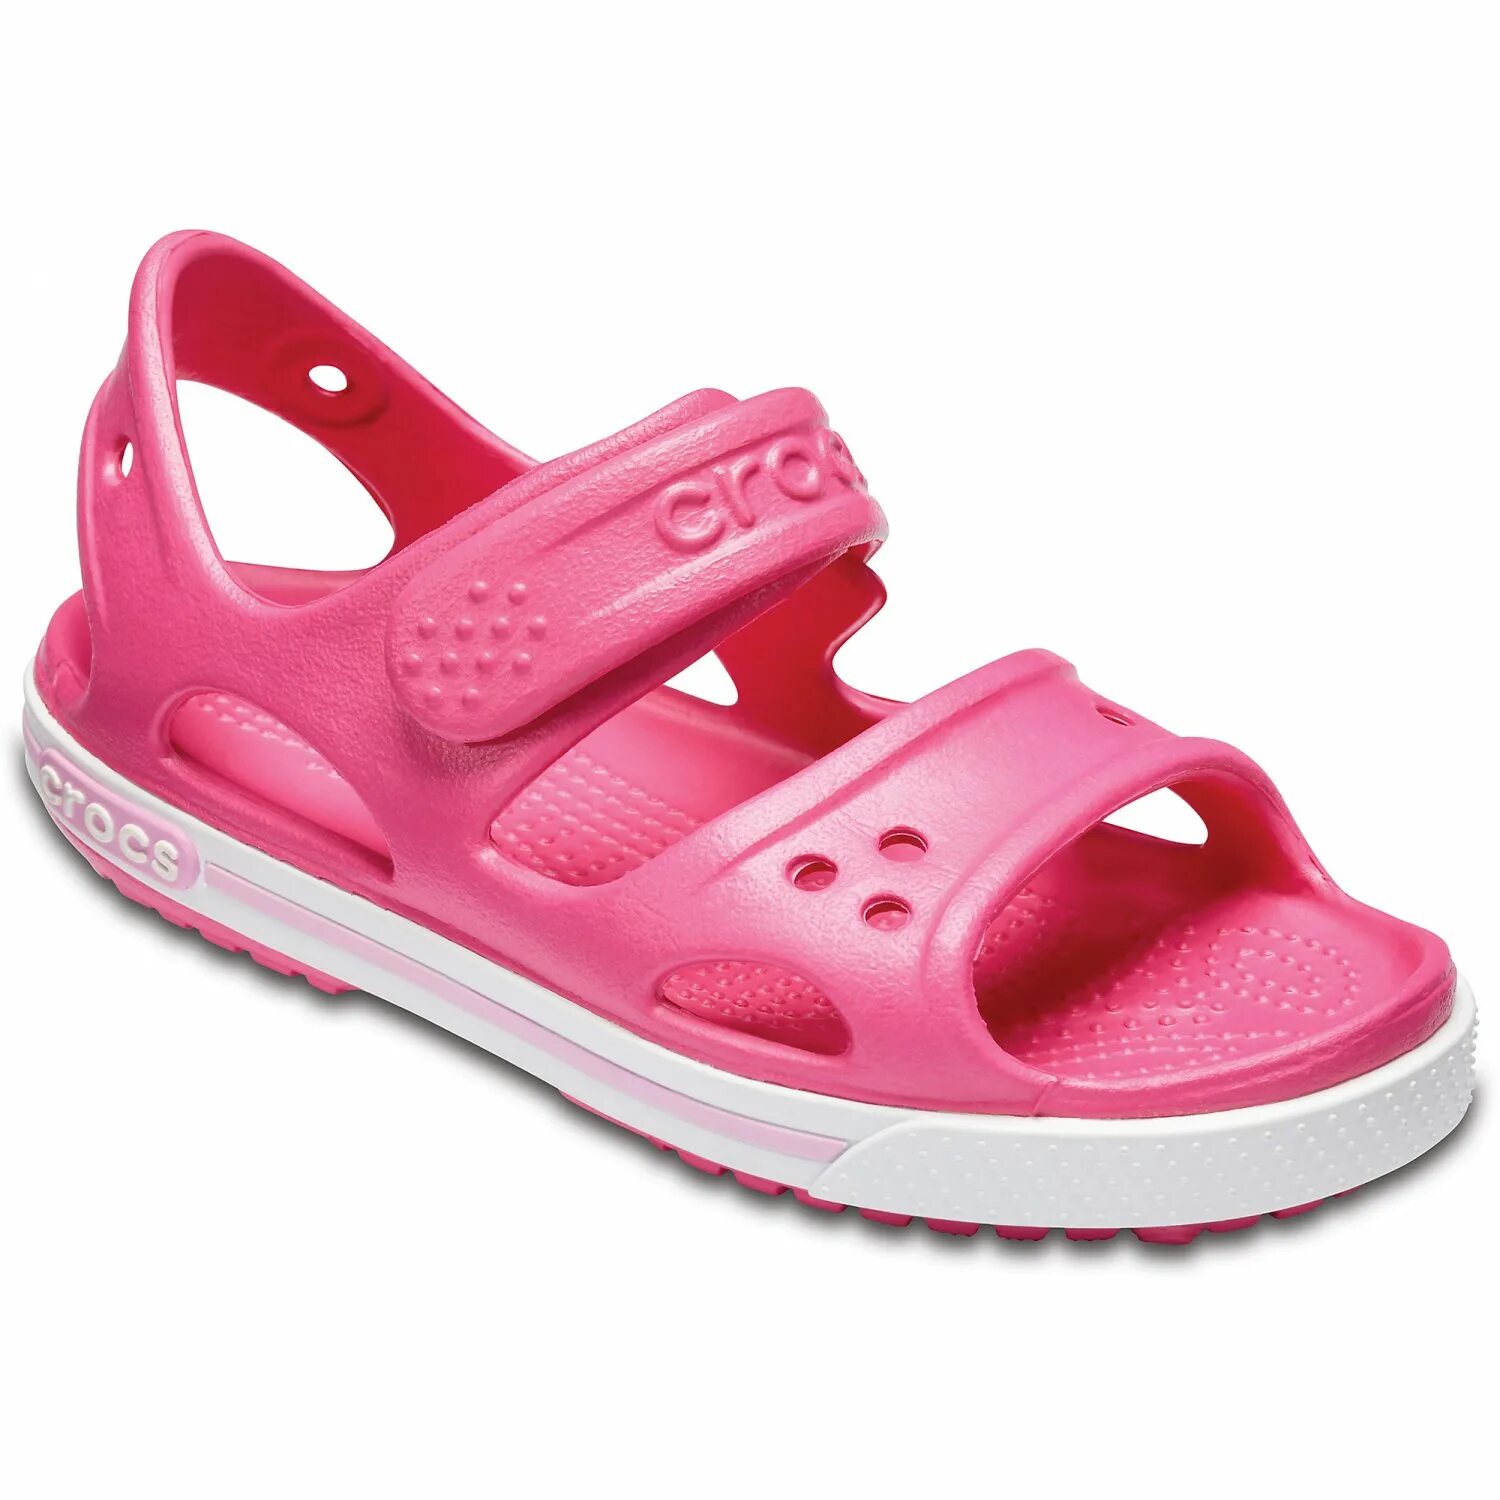 Розовые сандали. Сандалии Crocs Crocband. Crocs Crocband II Sandal PS. Сандалии Crocs Crocband Sandal. Crocs Crocband розовые.